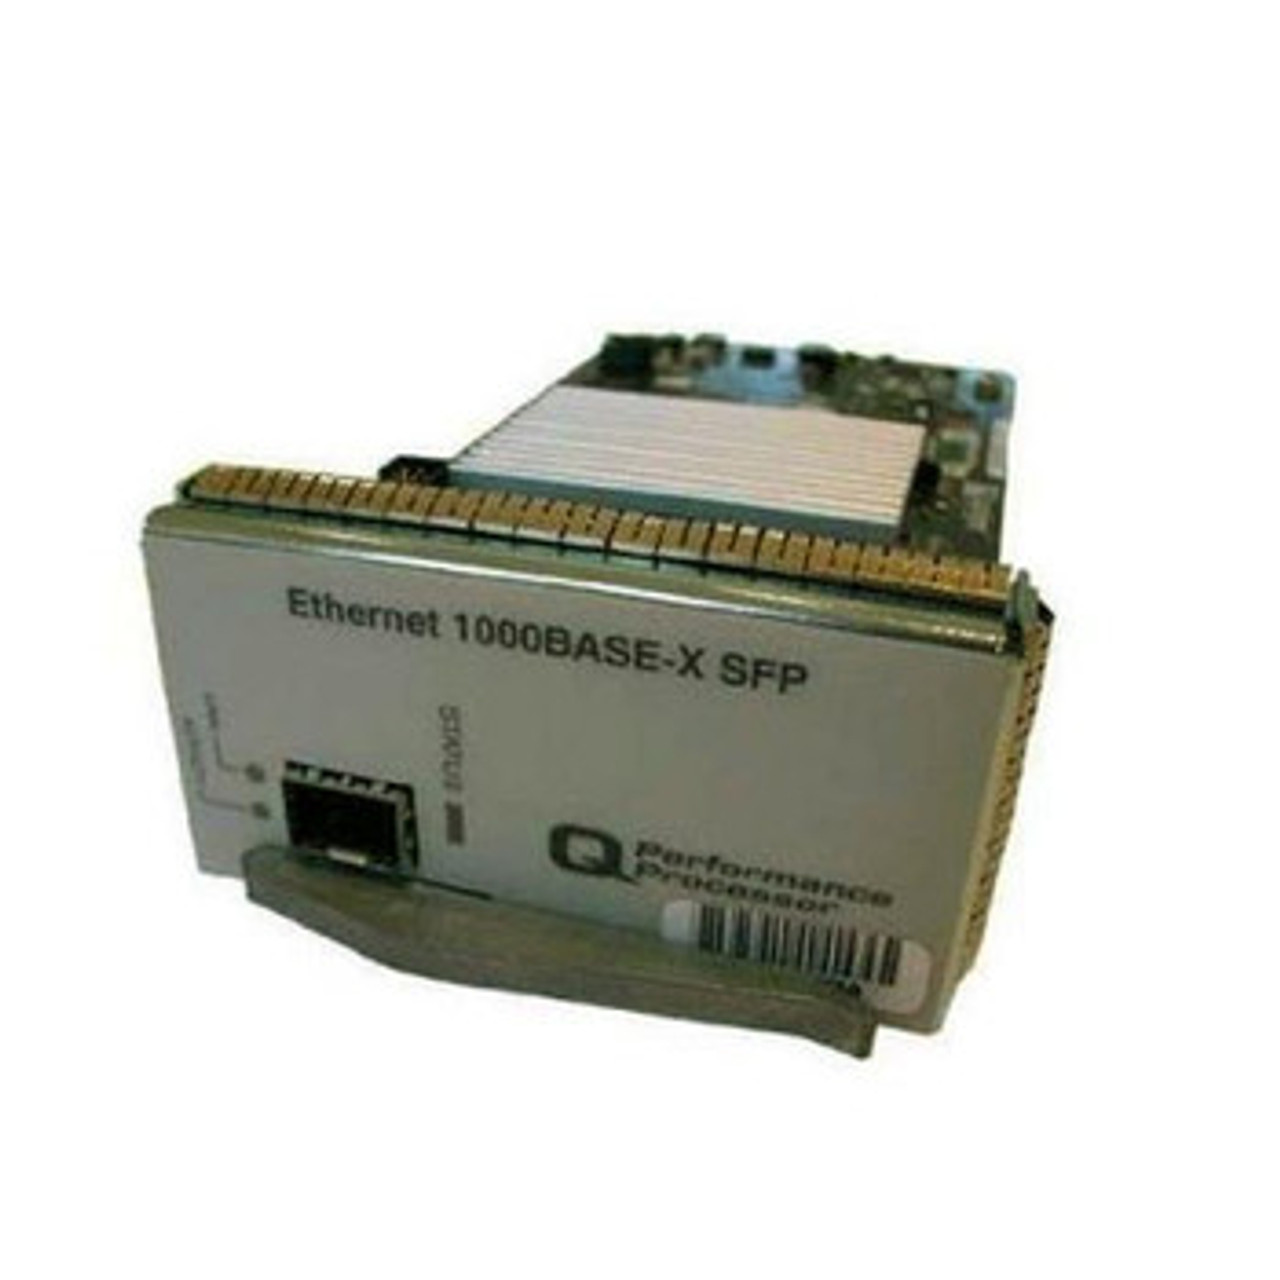 00-MK16-3001 | Juniper Networks | 1-Port Gigabit Ethernet PIC Interface Card - Requires a pluggable SFP Optics Module